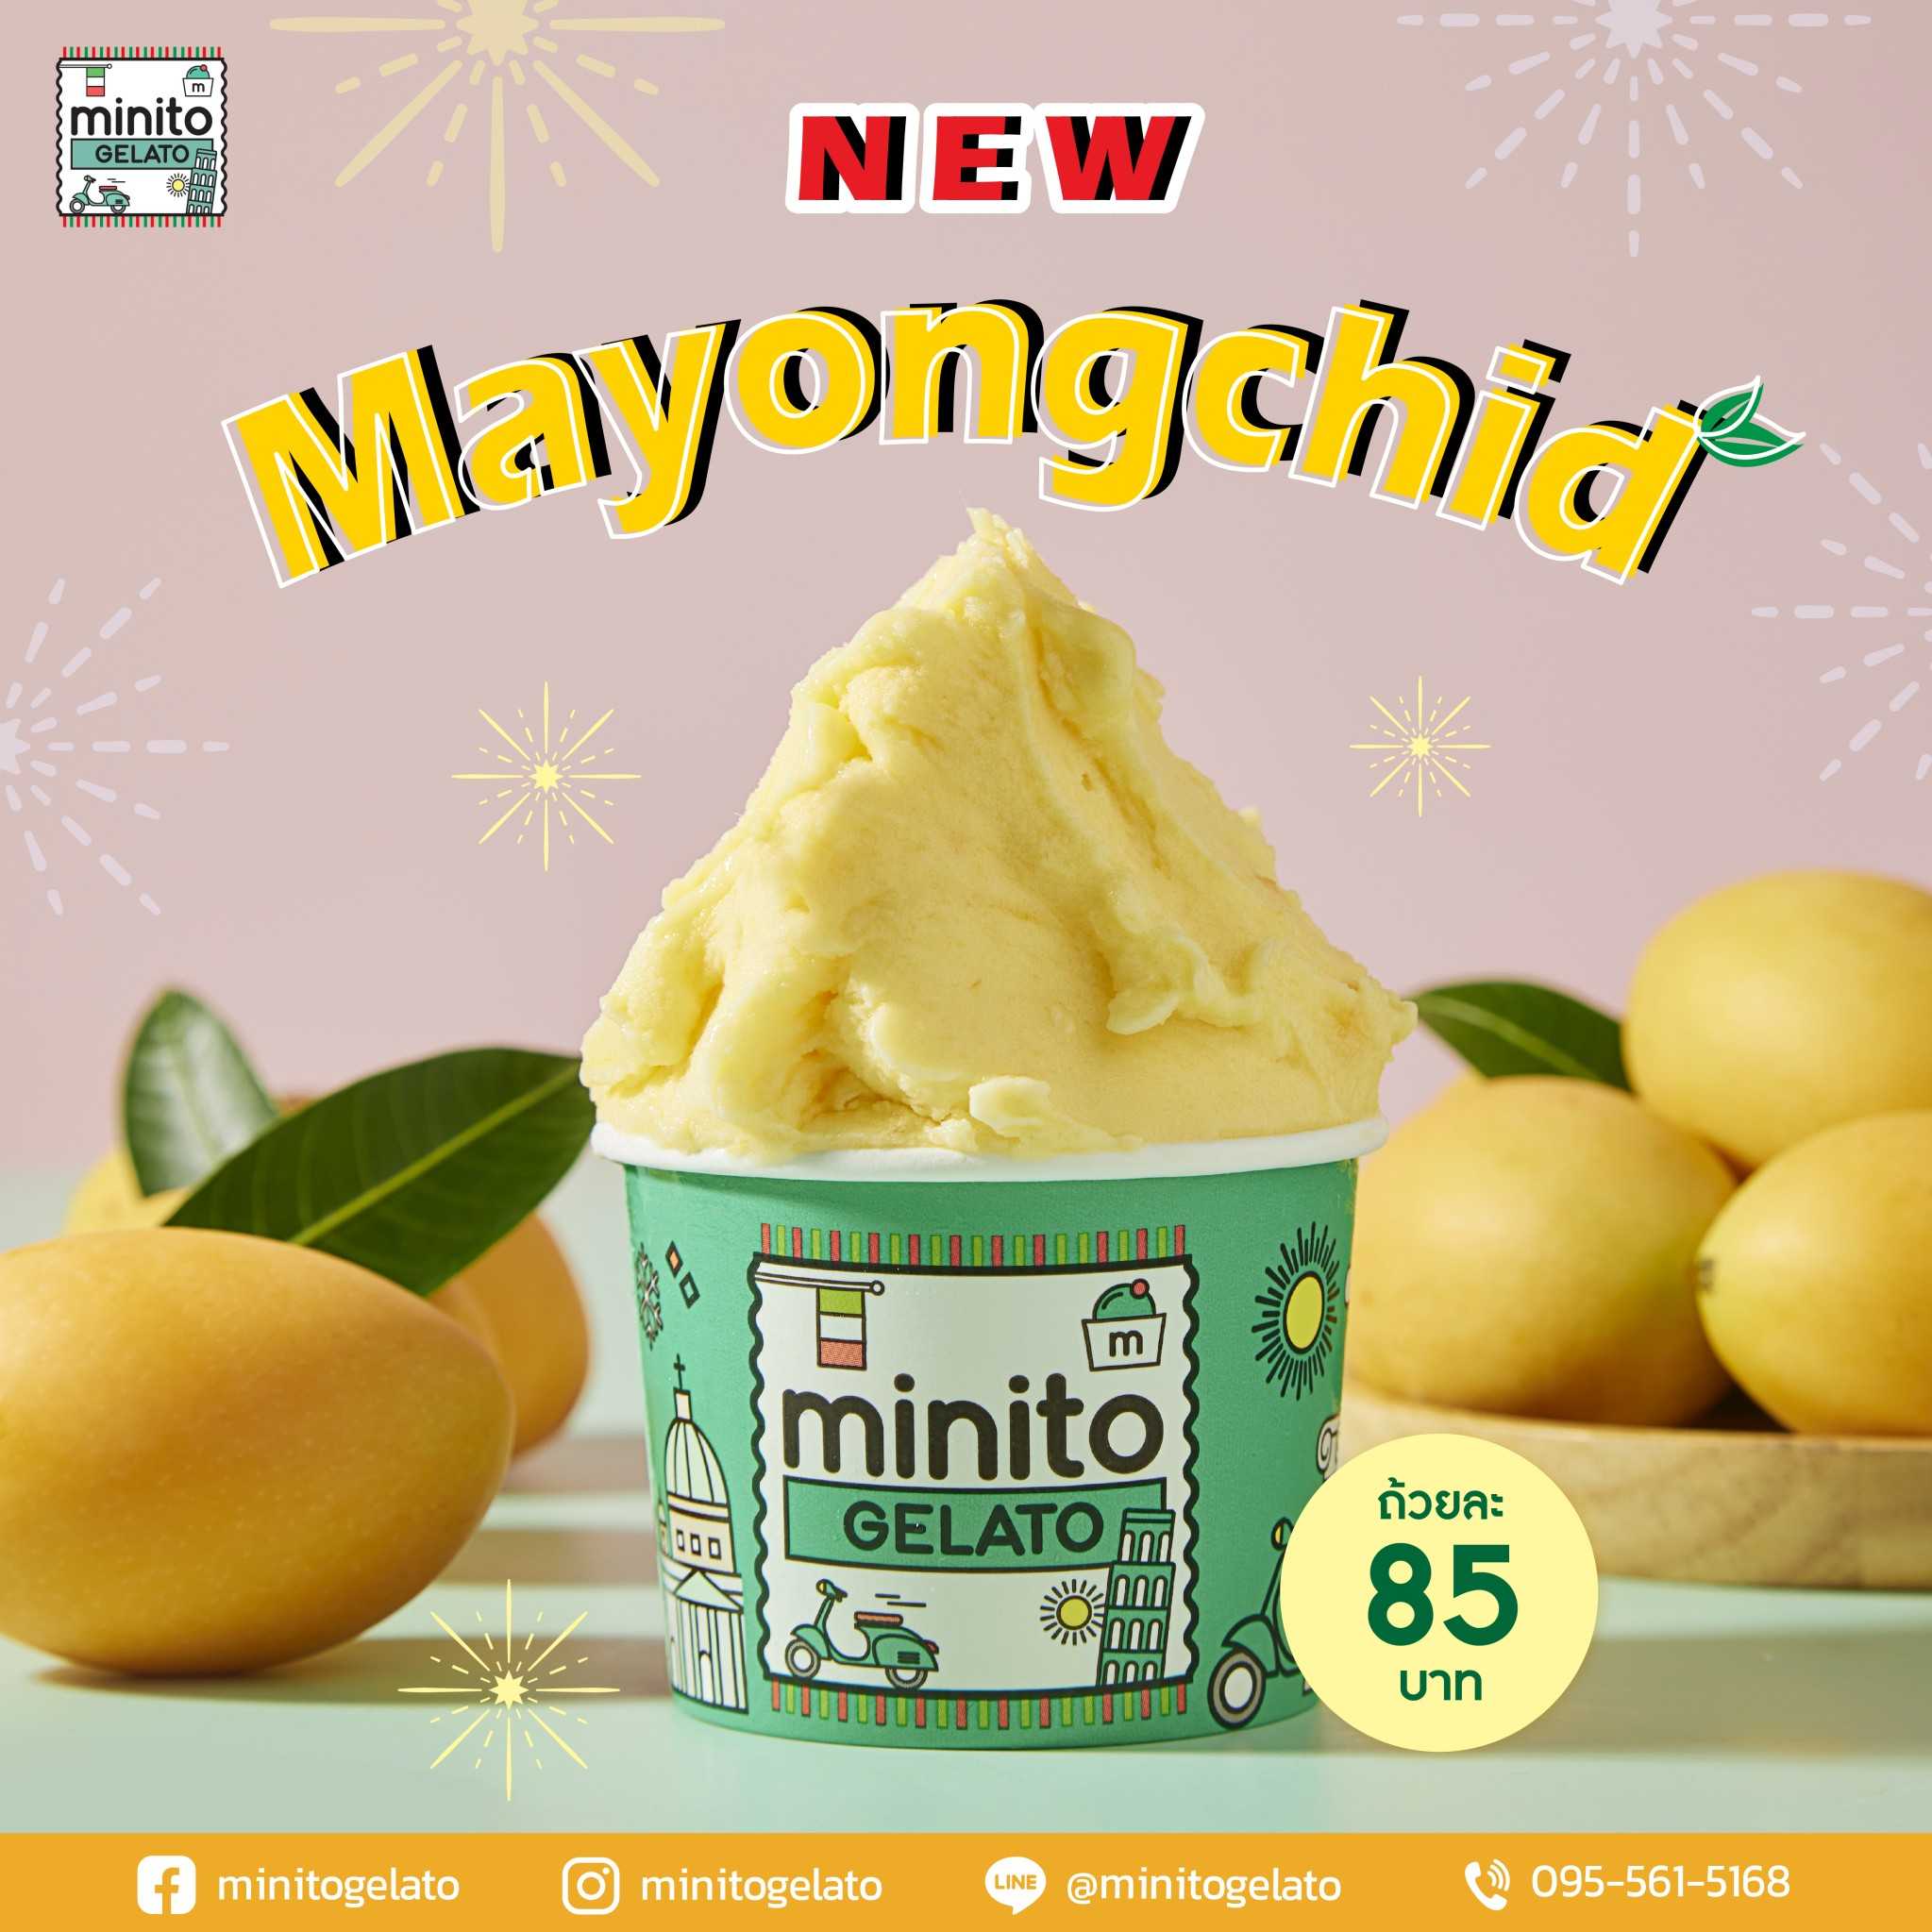 Mayongchid ไอศกรีมรสมะยงชิด